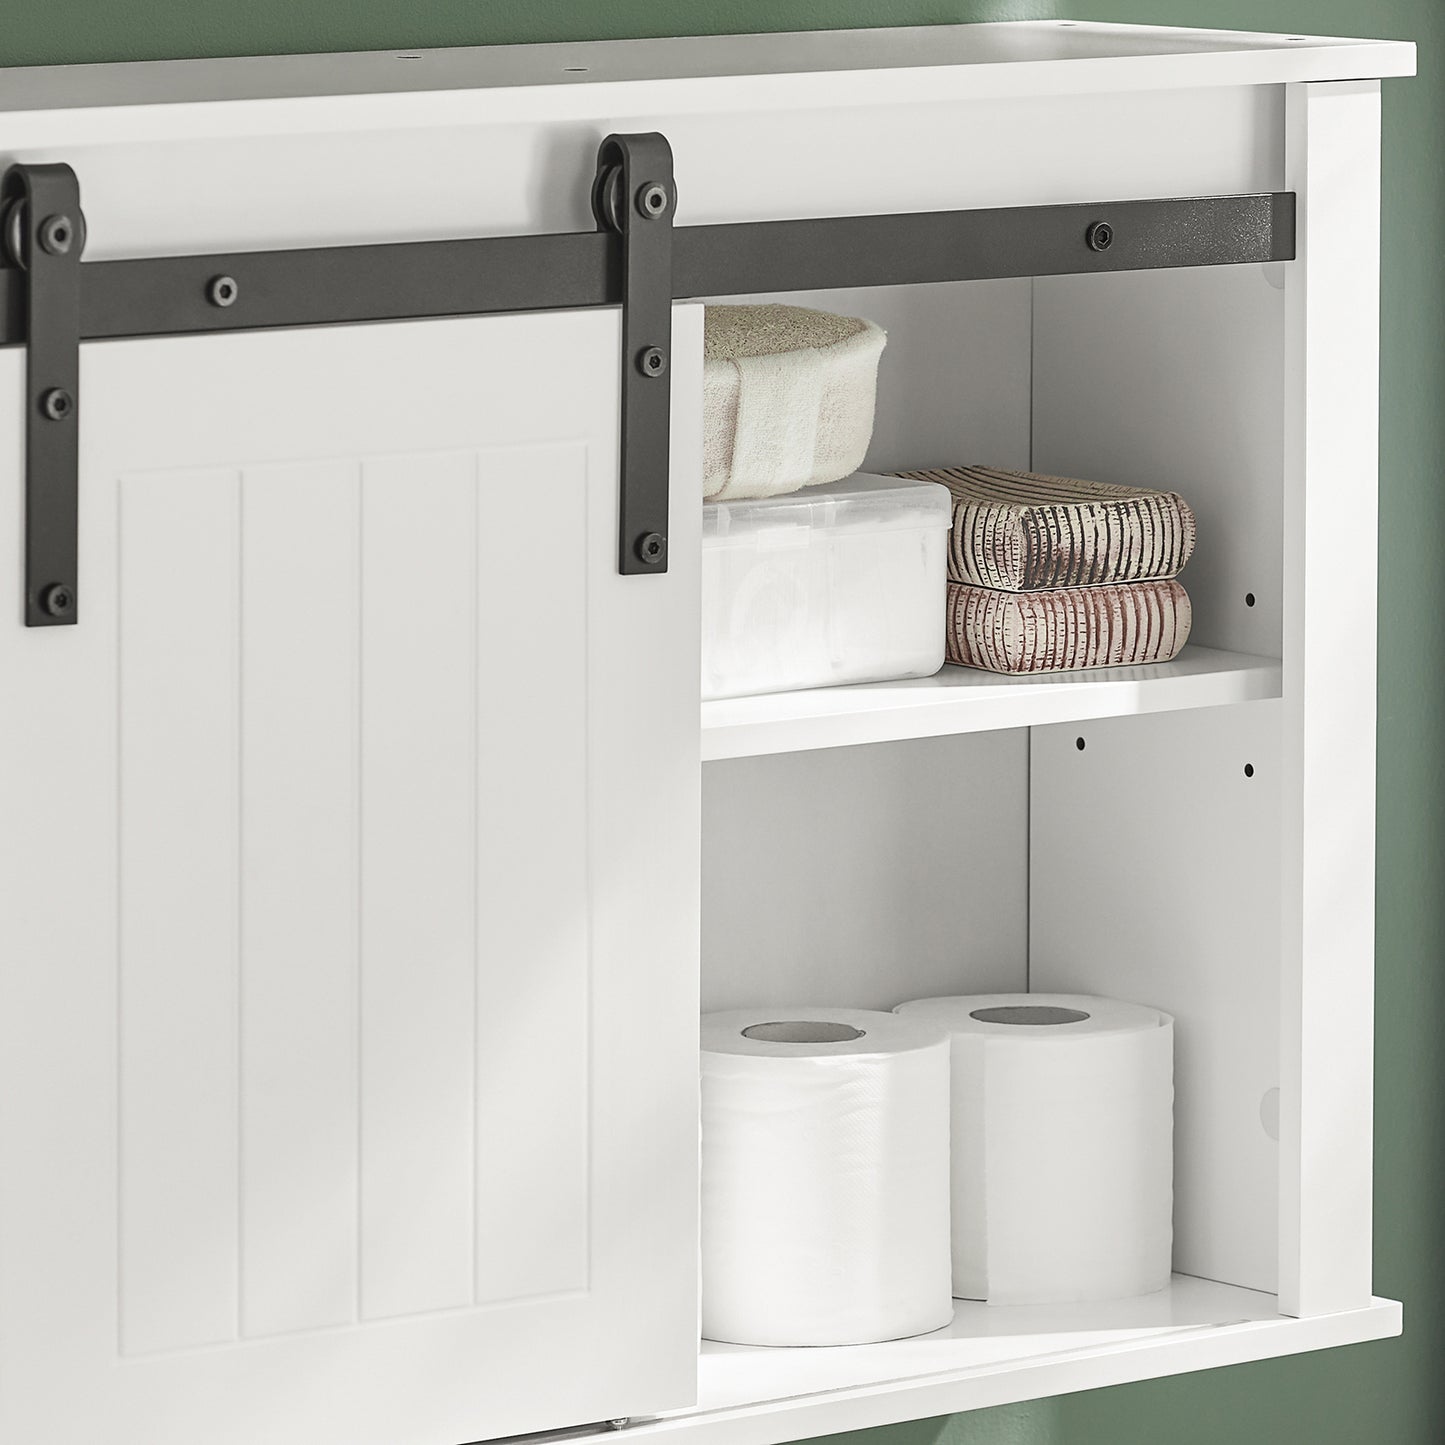 SoBuy Bathroom Wall Cabinet Medicine Cabinet Wall Mounted Storage Cabinet Cupboard with Sliding Door